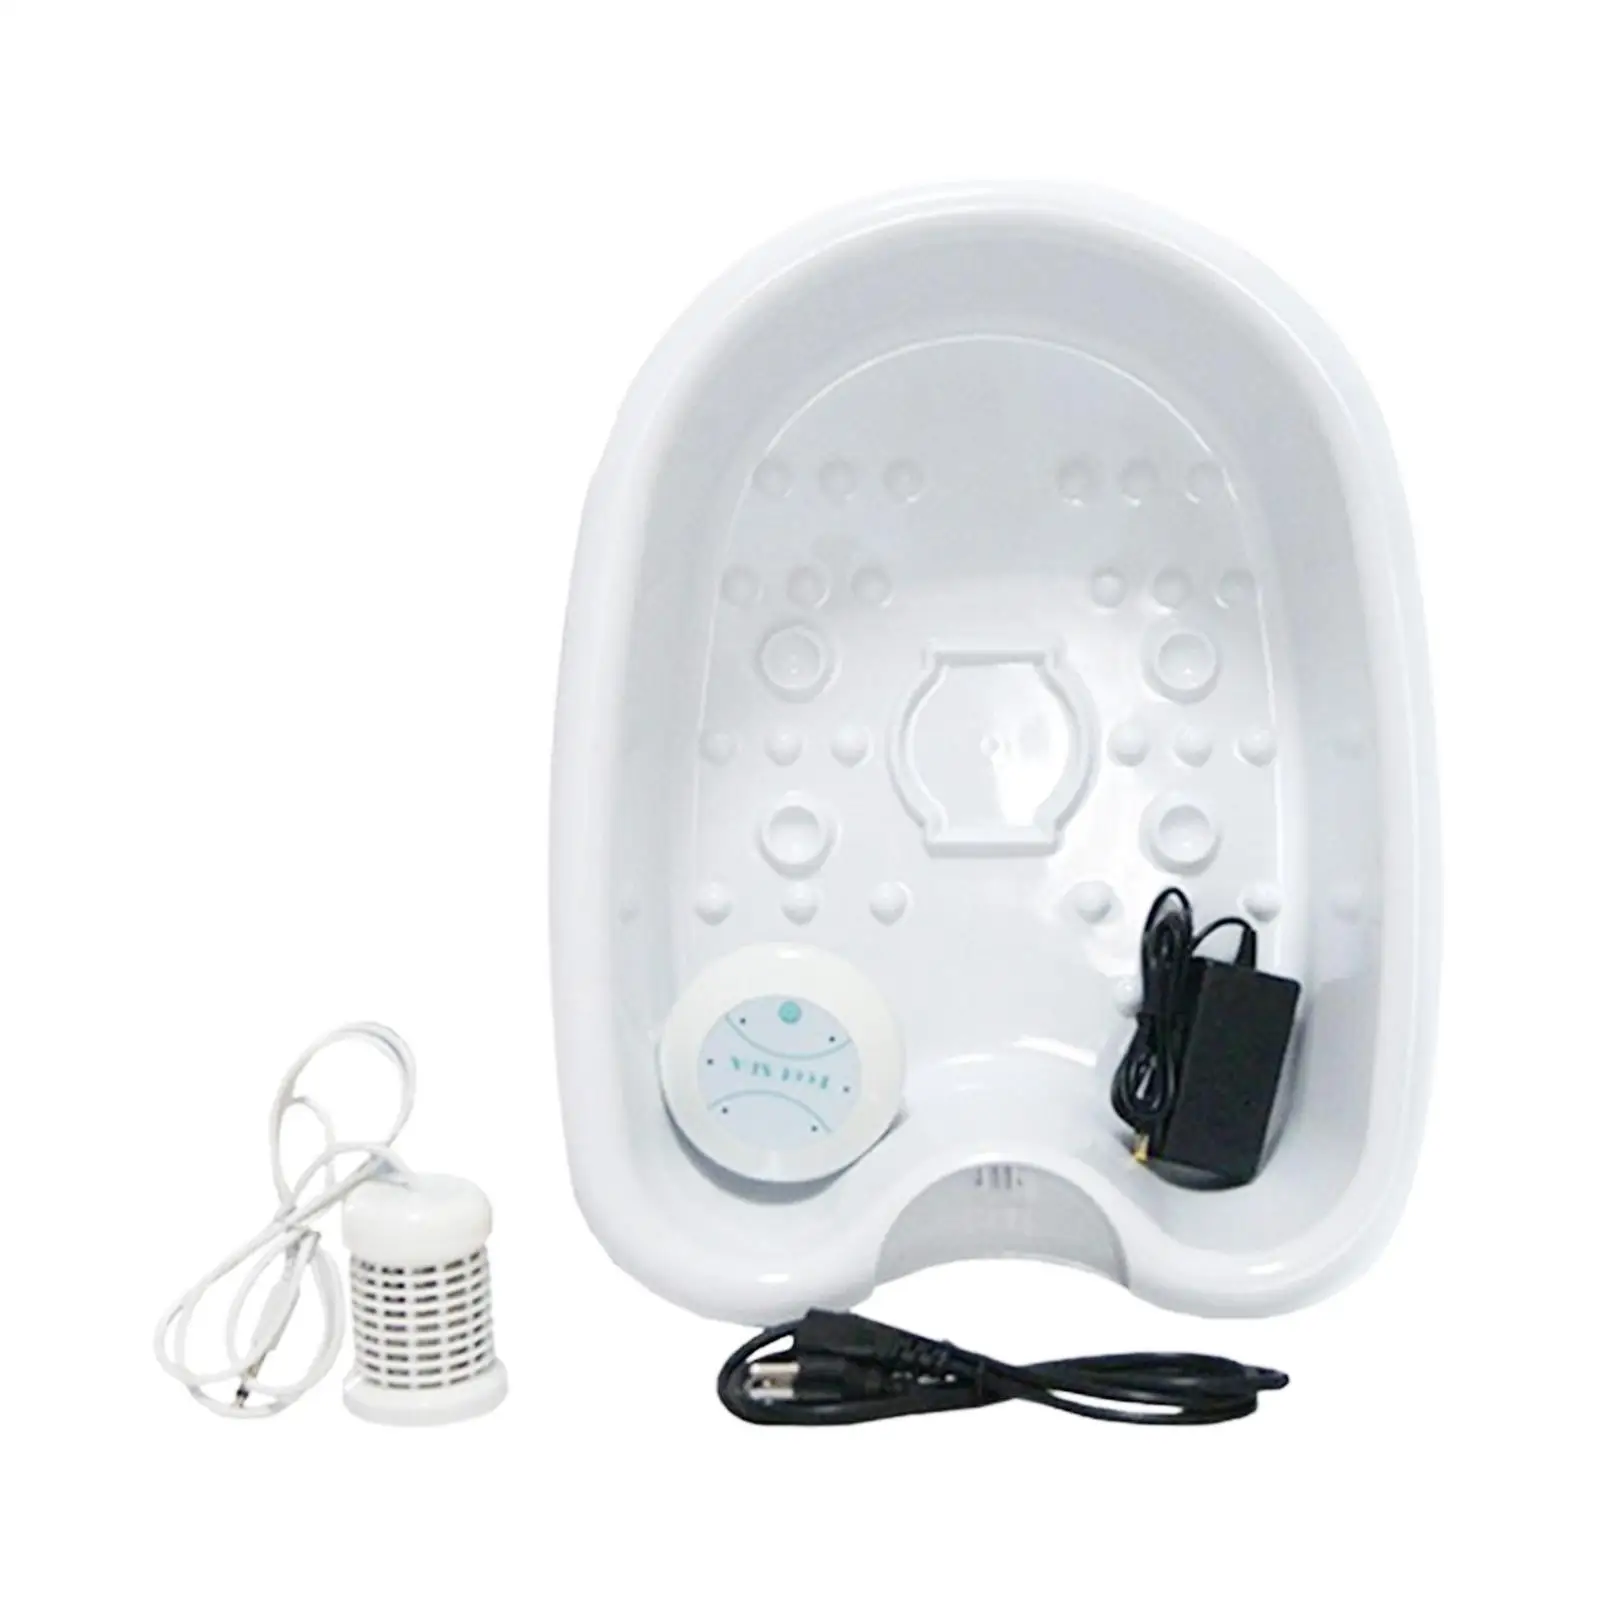 Portable Ionic Detox Foot Machine Elders Gift Convenient Detox Ionic Foot SPA Machine for Beauty Home Family Travel Salon